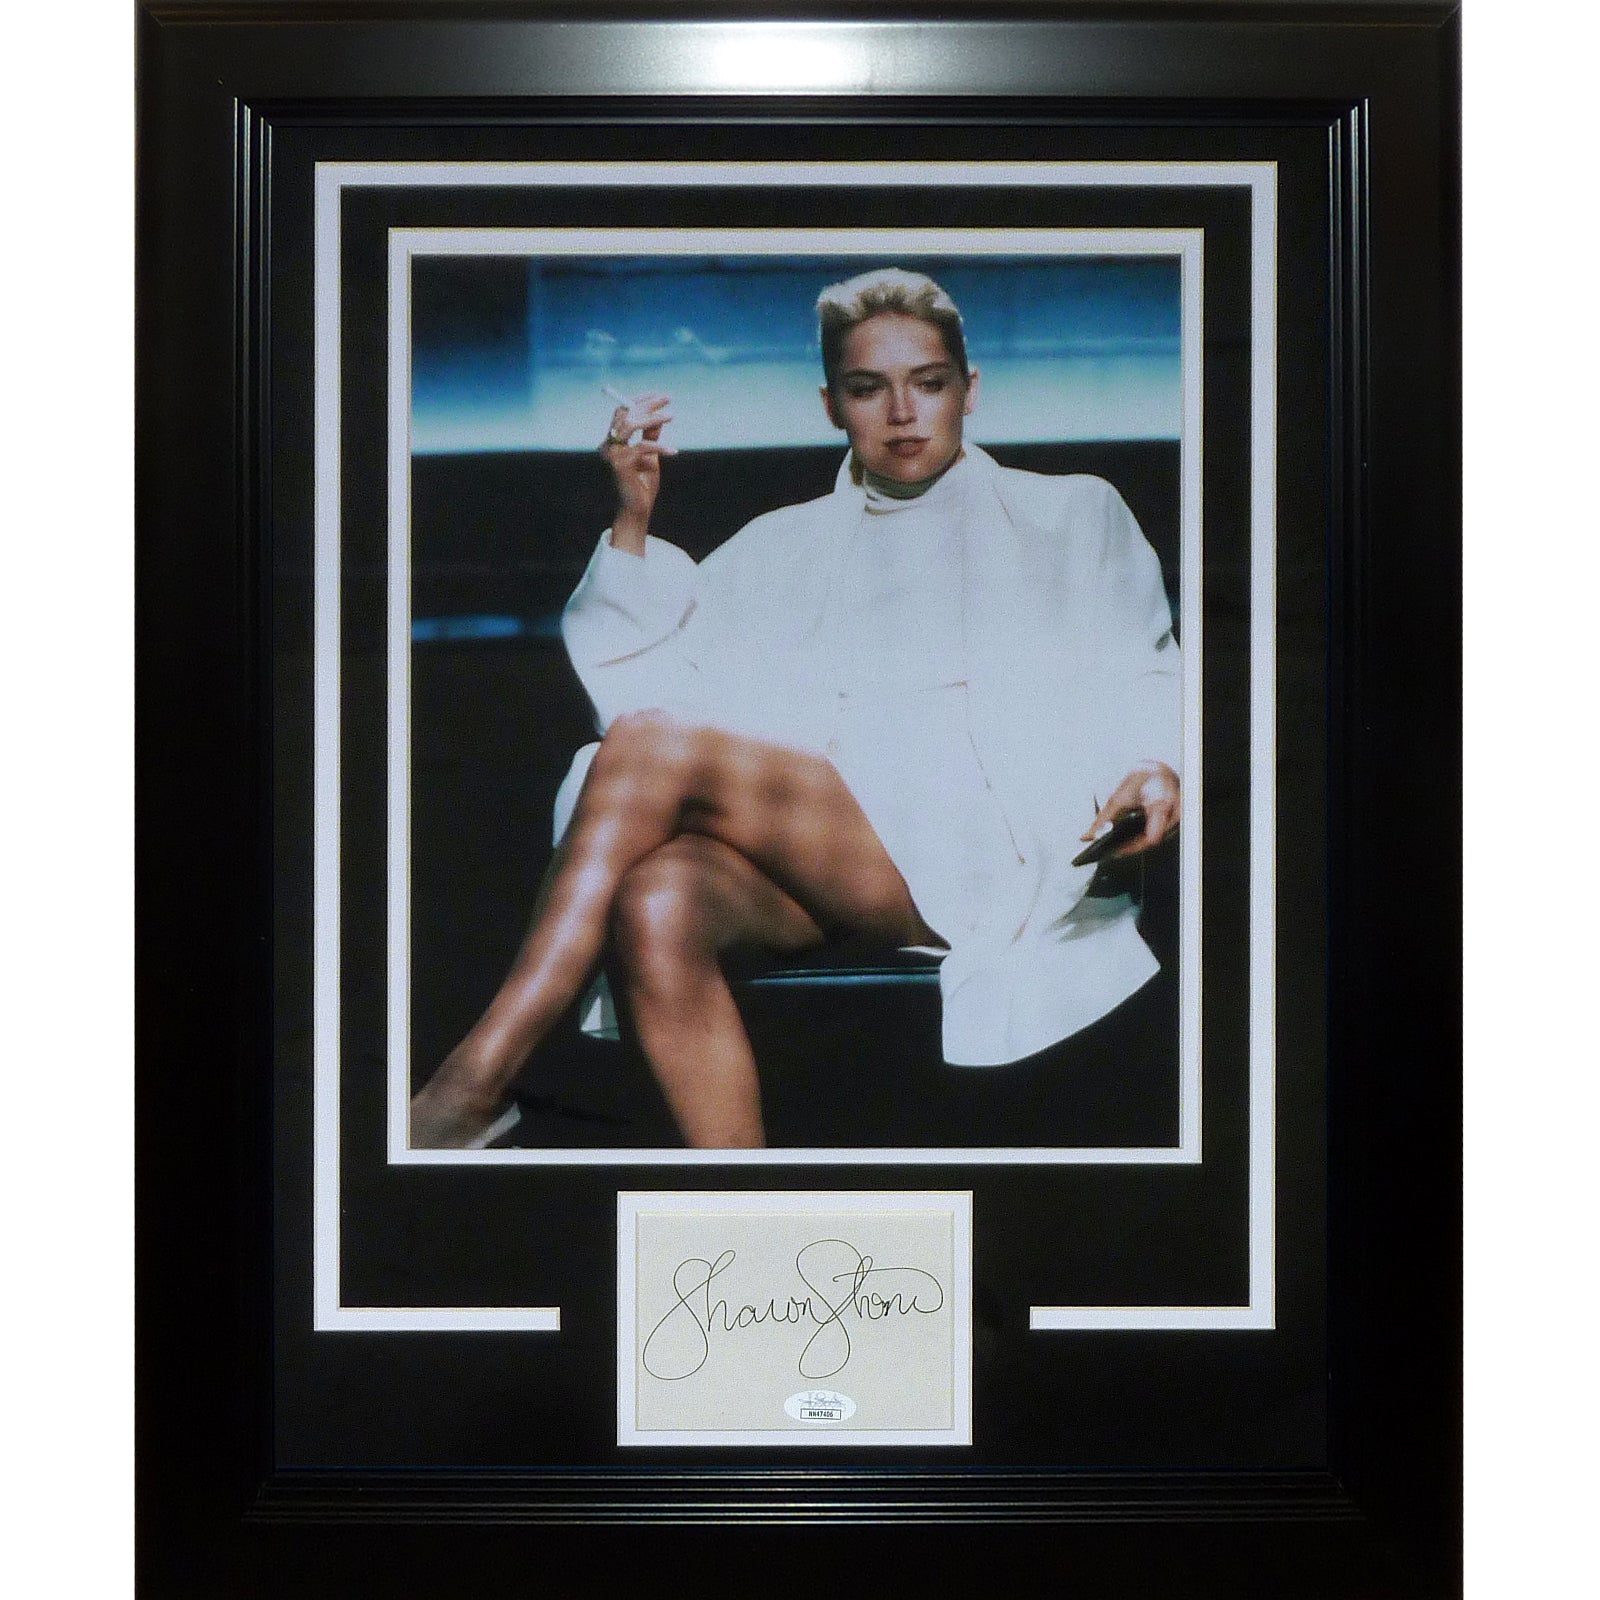 Sharon Stone Autographed “Basic Instinct” 11x14 Photo Deluxe Framed with Signature – JSA